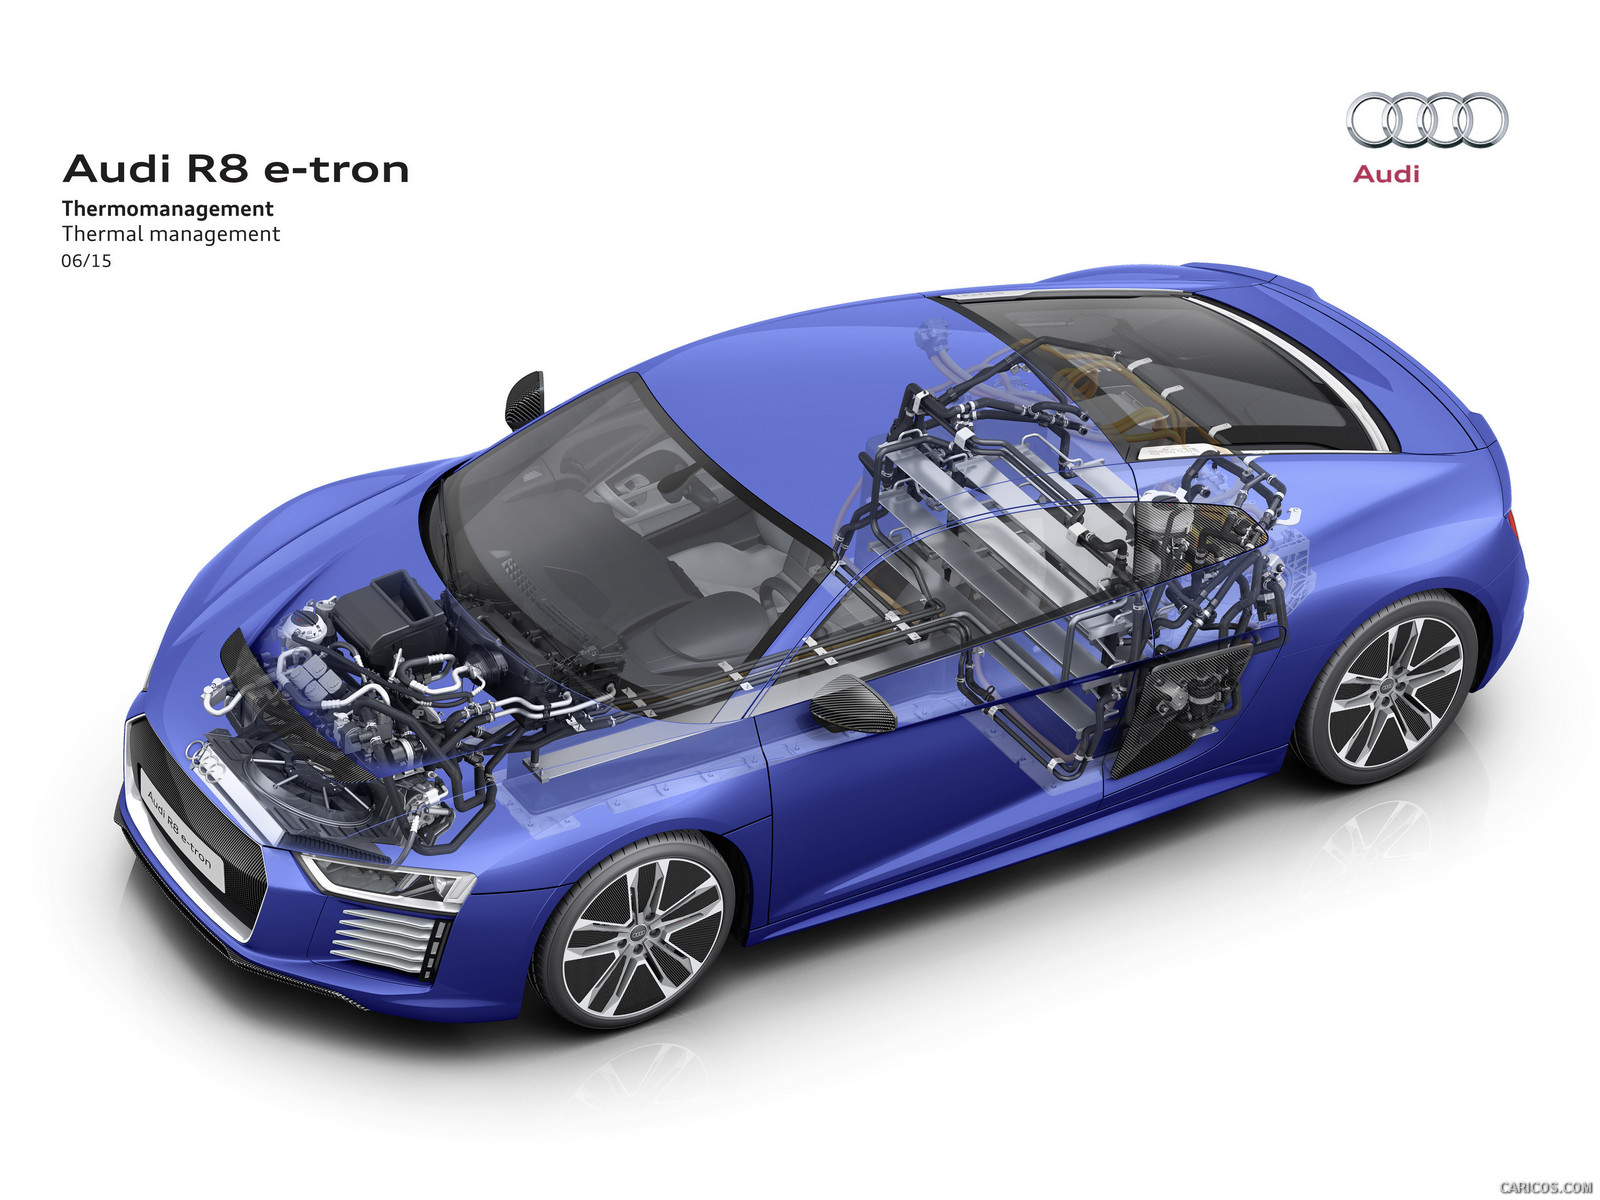 2016 Audi R8 etron  Thermal Management  Wallpaper 25  1600x1200